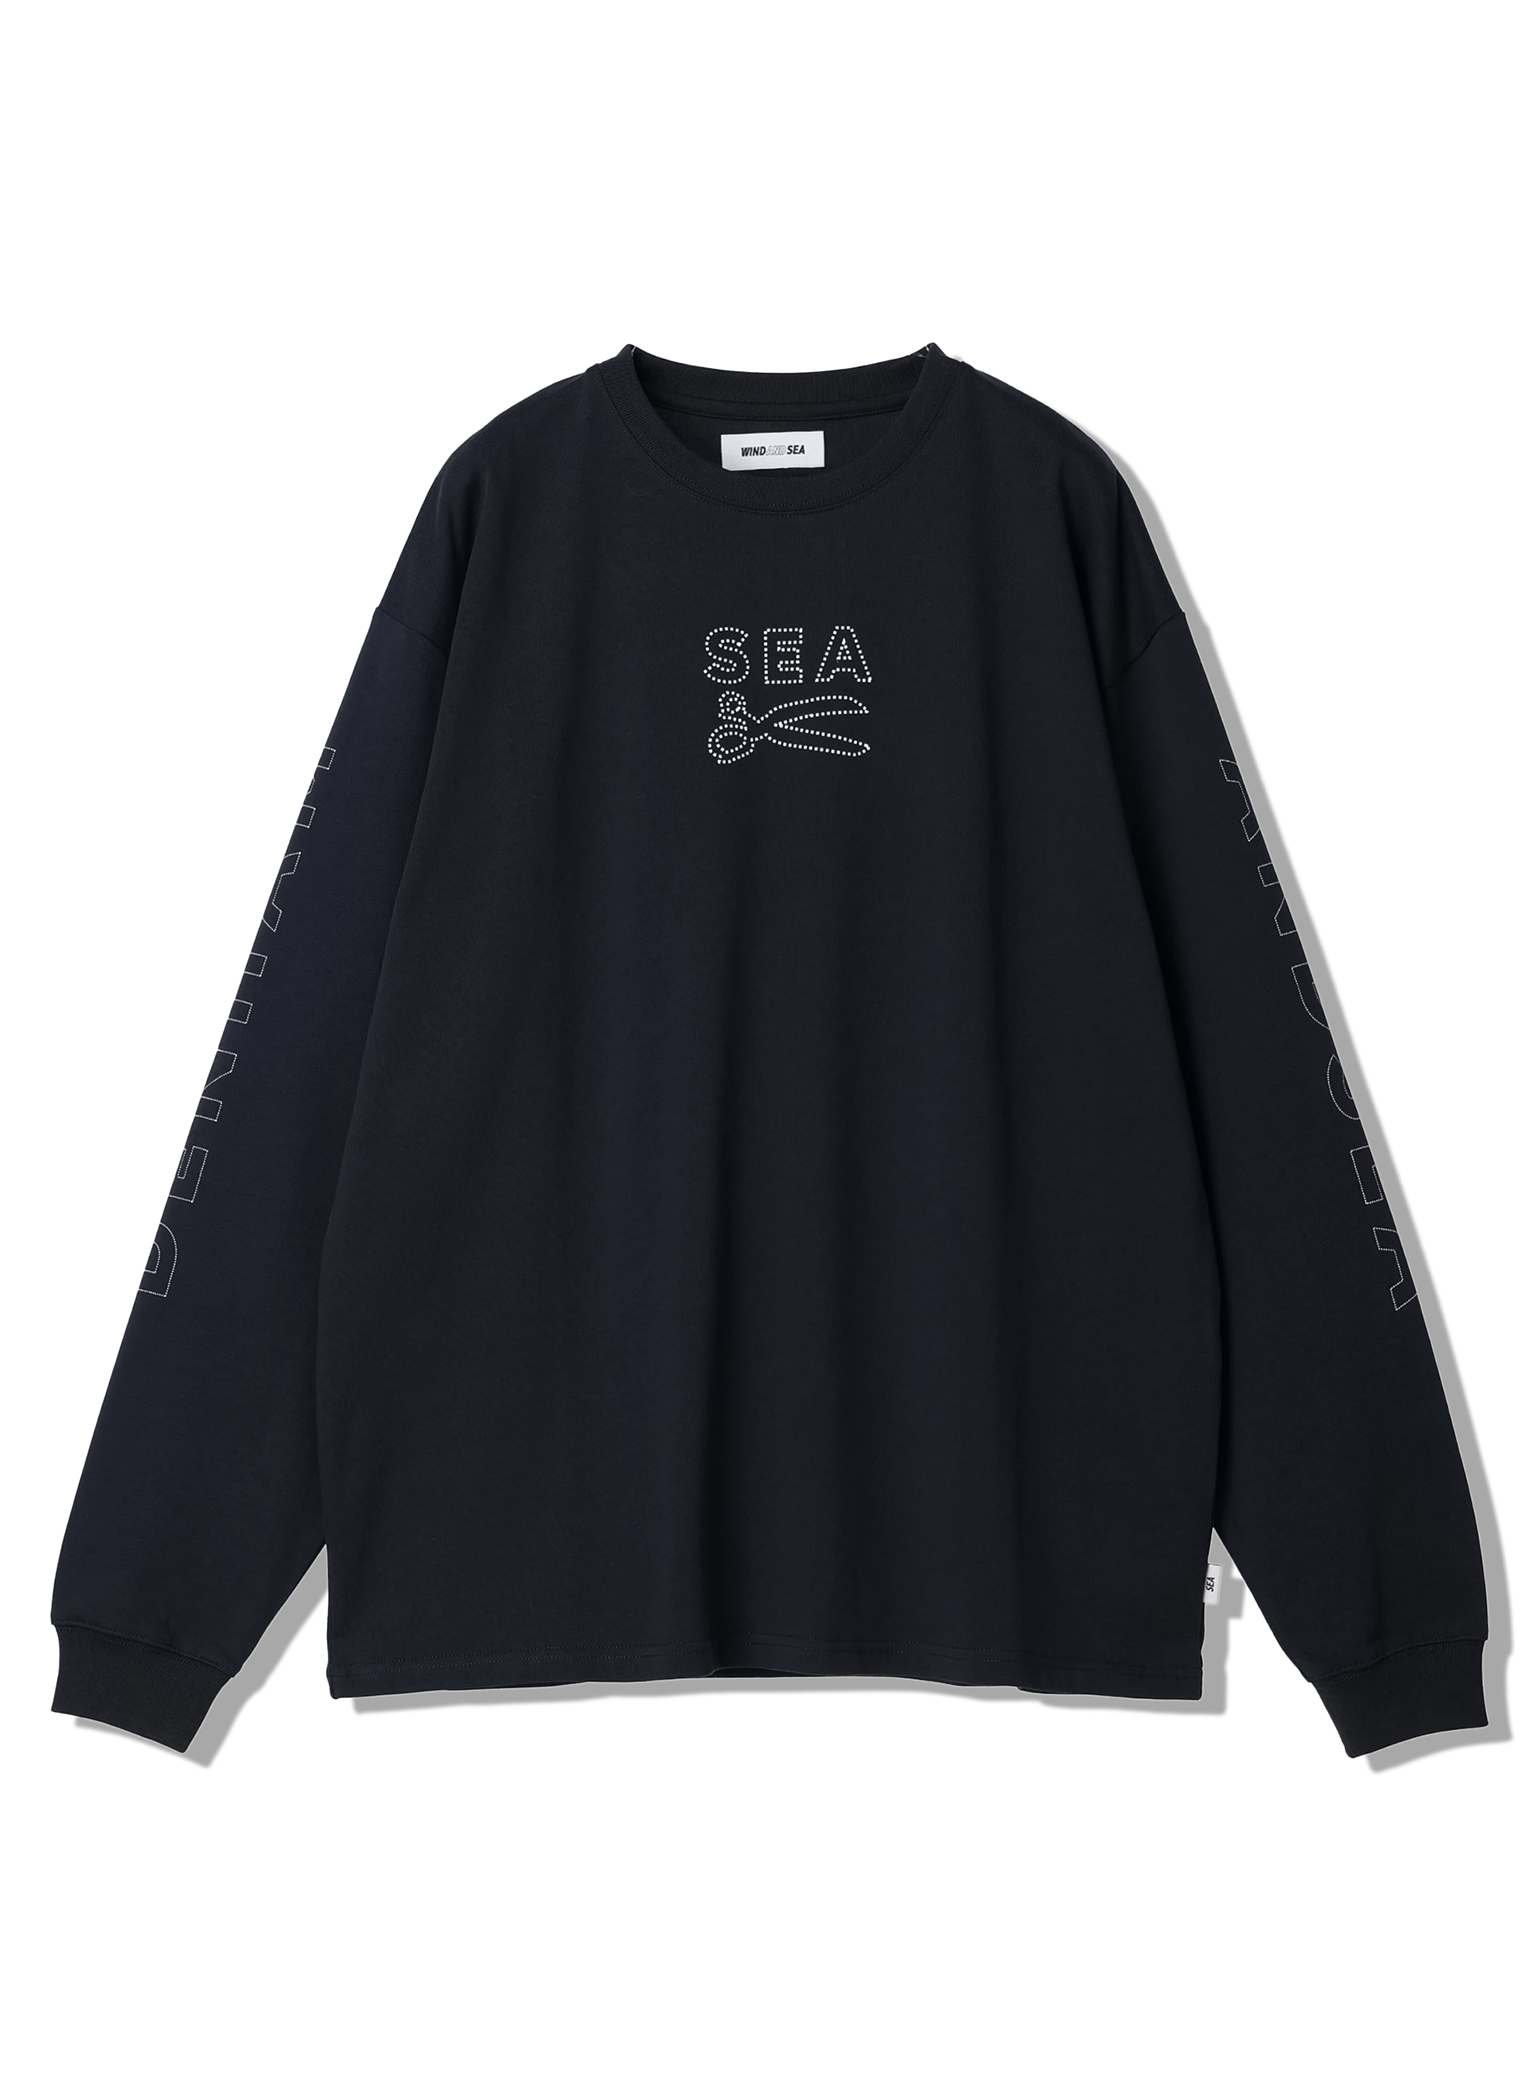 Tシャツ/カットソー(七分/長袖)DENHAM x WDS STITCH RAZOR L/S TEE